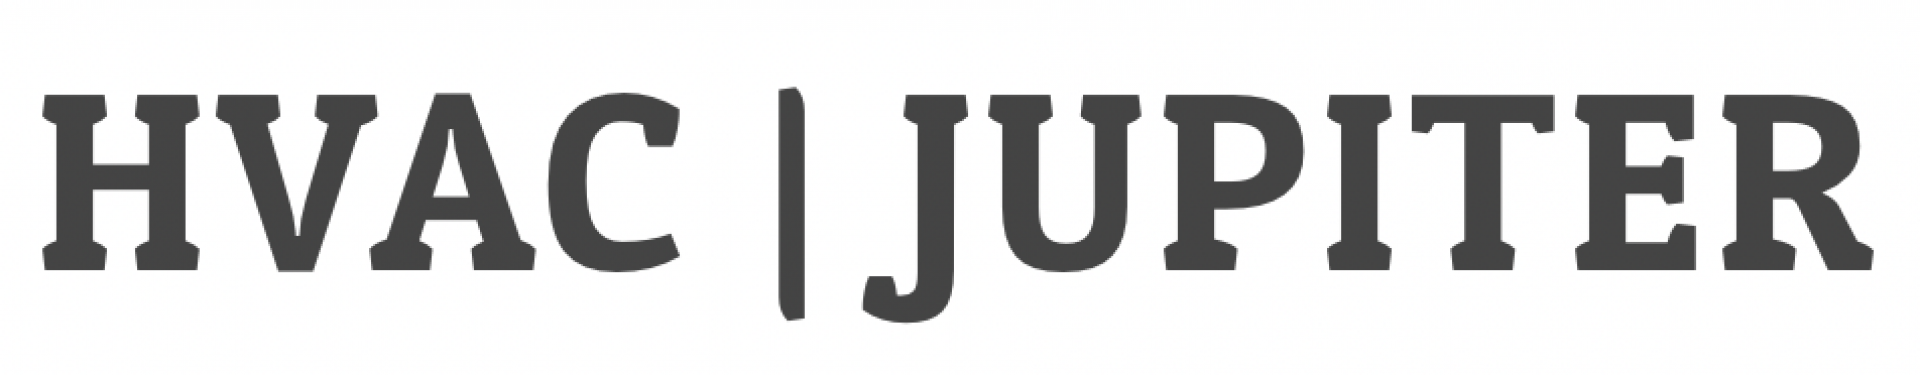 Jupiter Air Conditioning company logo